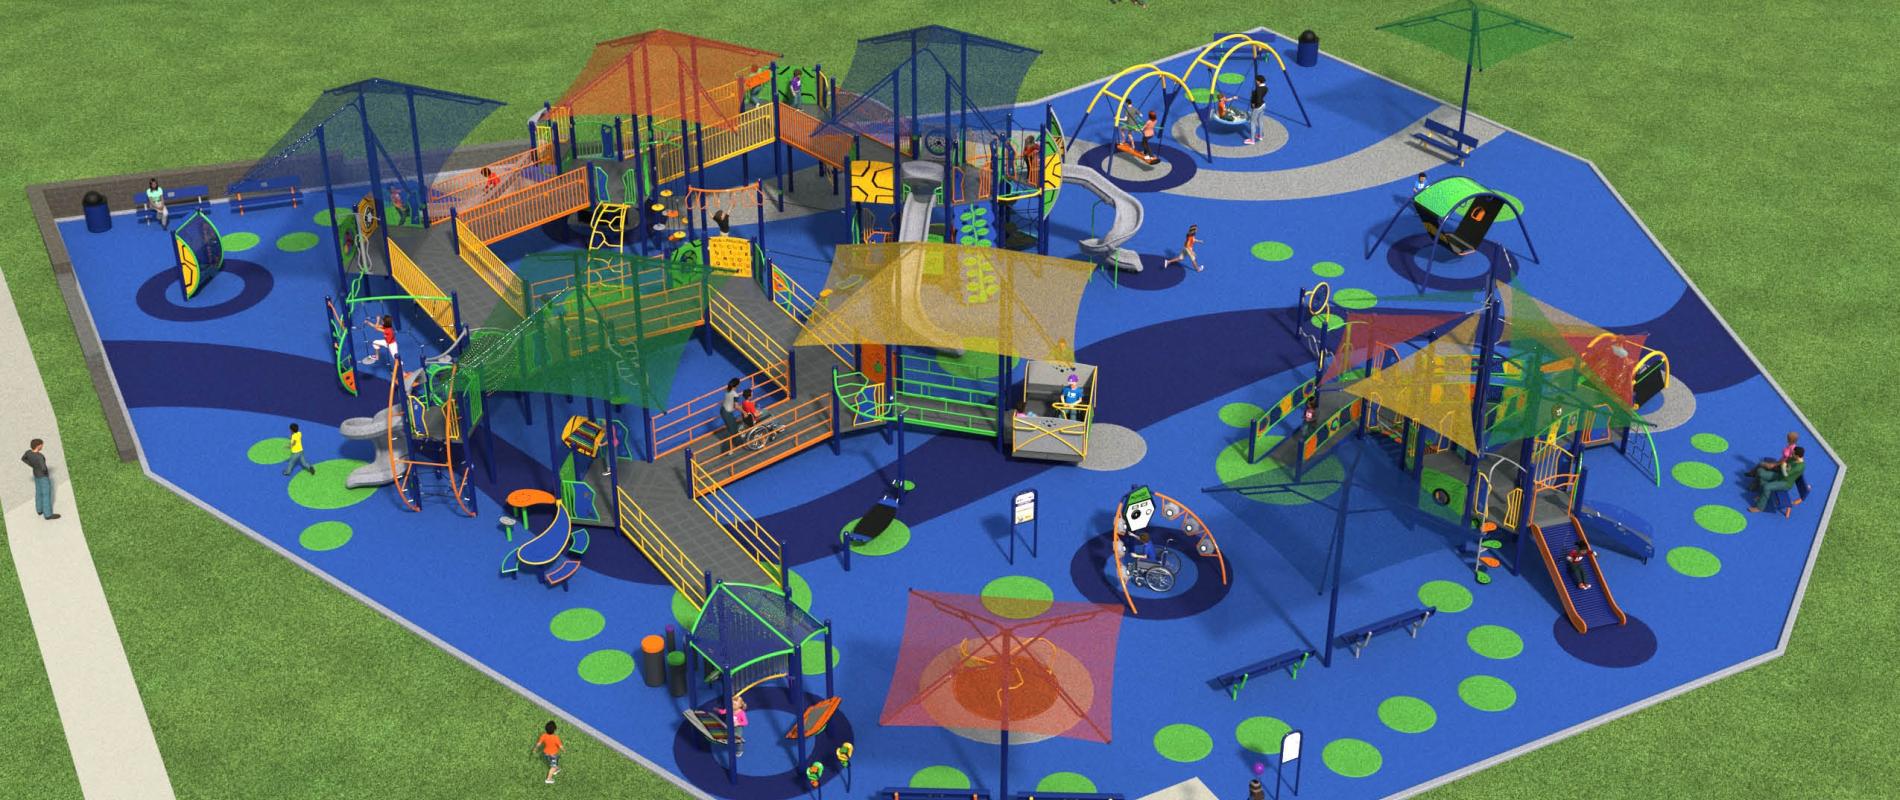 Inclusive Playground rendering 1